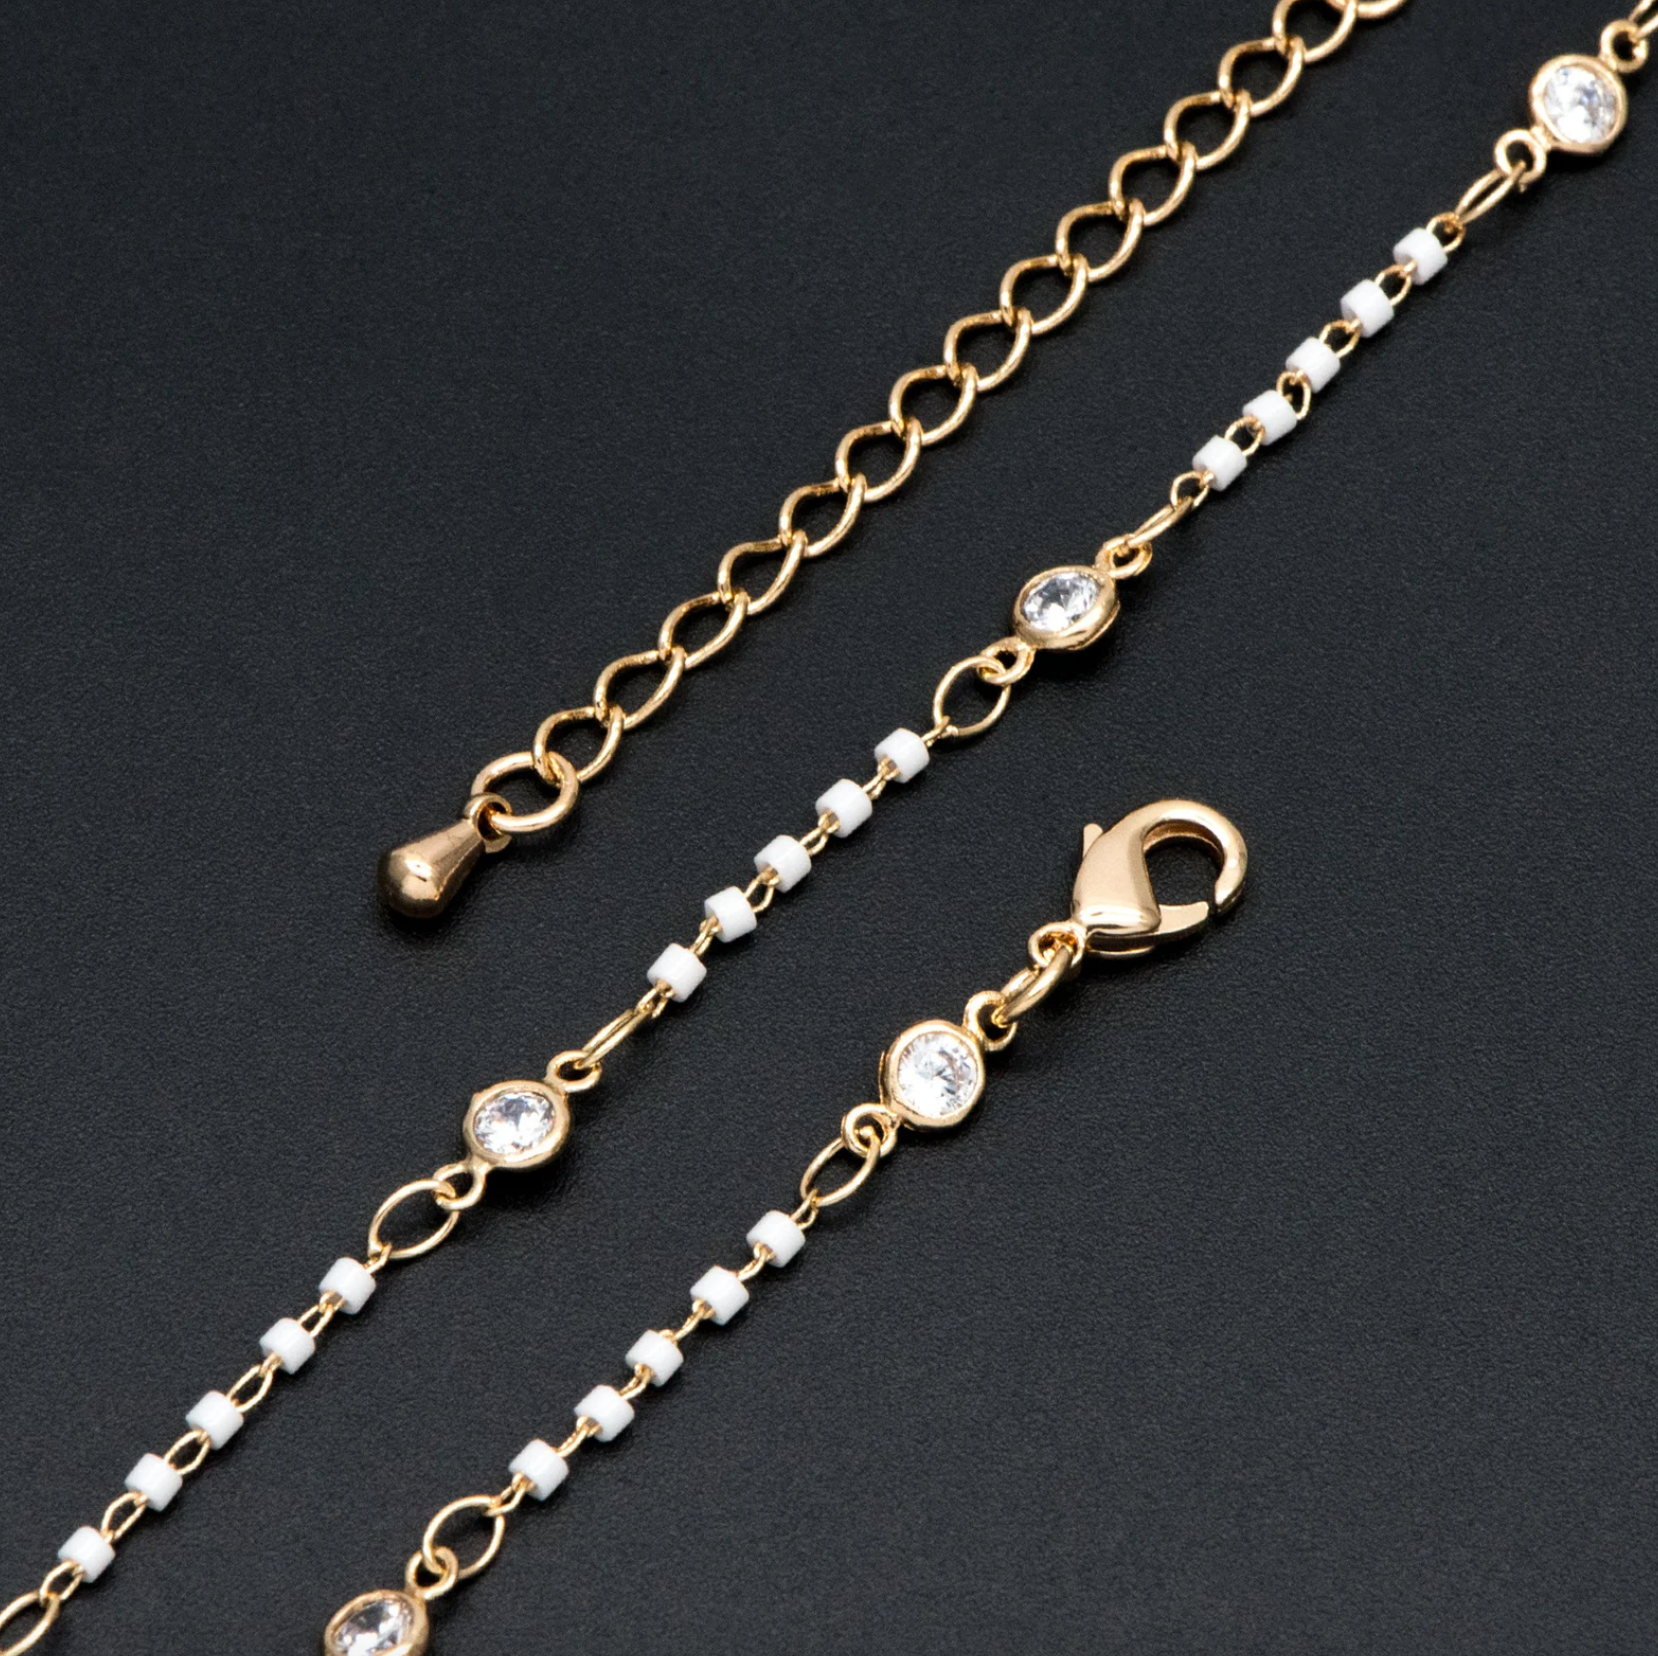 White Miyuki Seed Bead Chain Necklace 16-18 inch